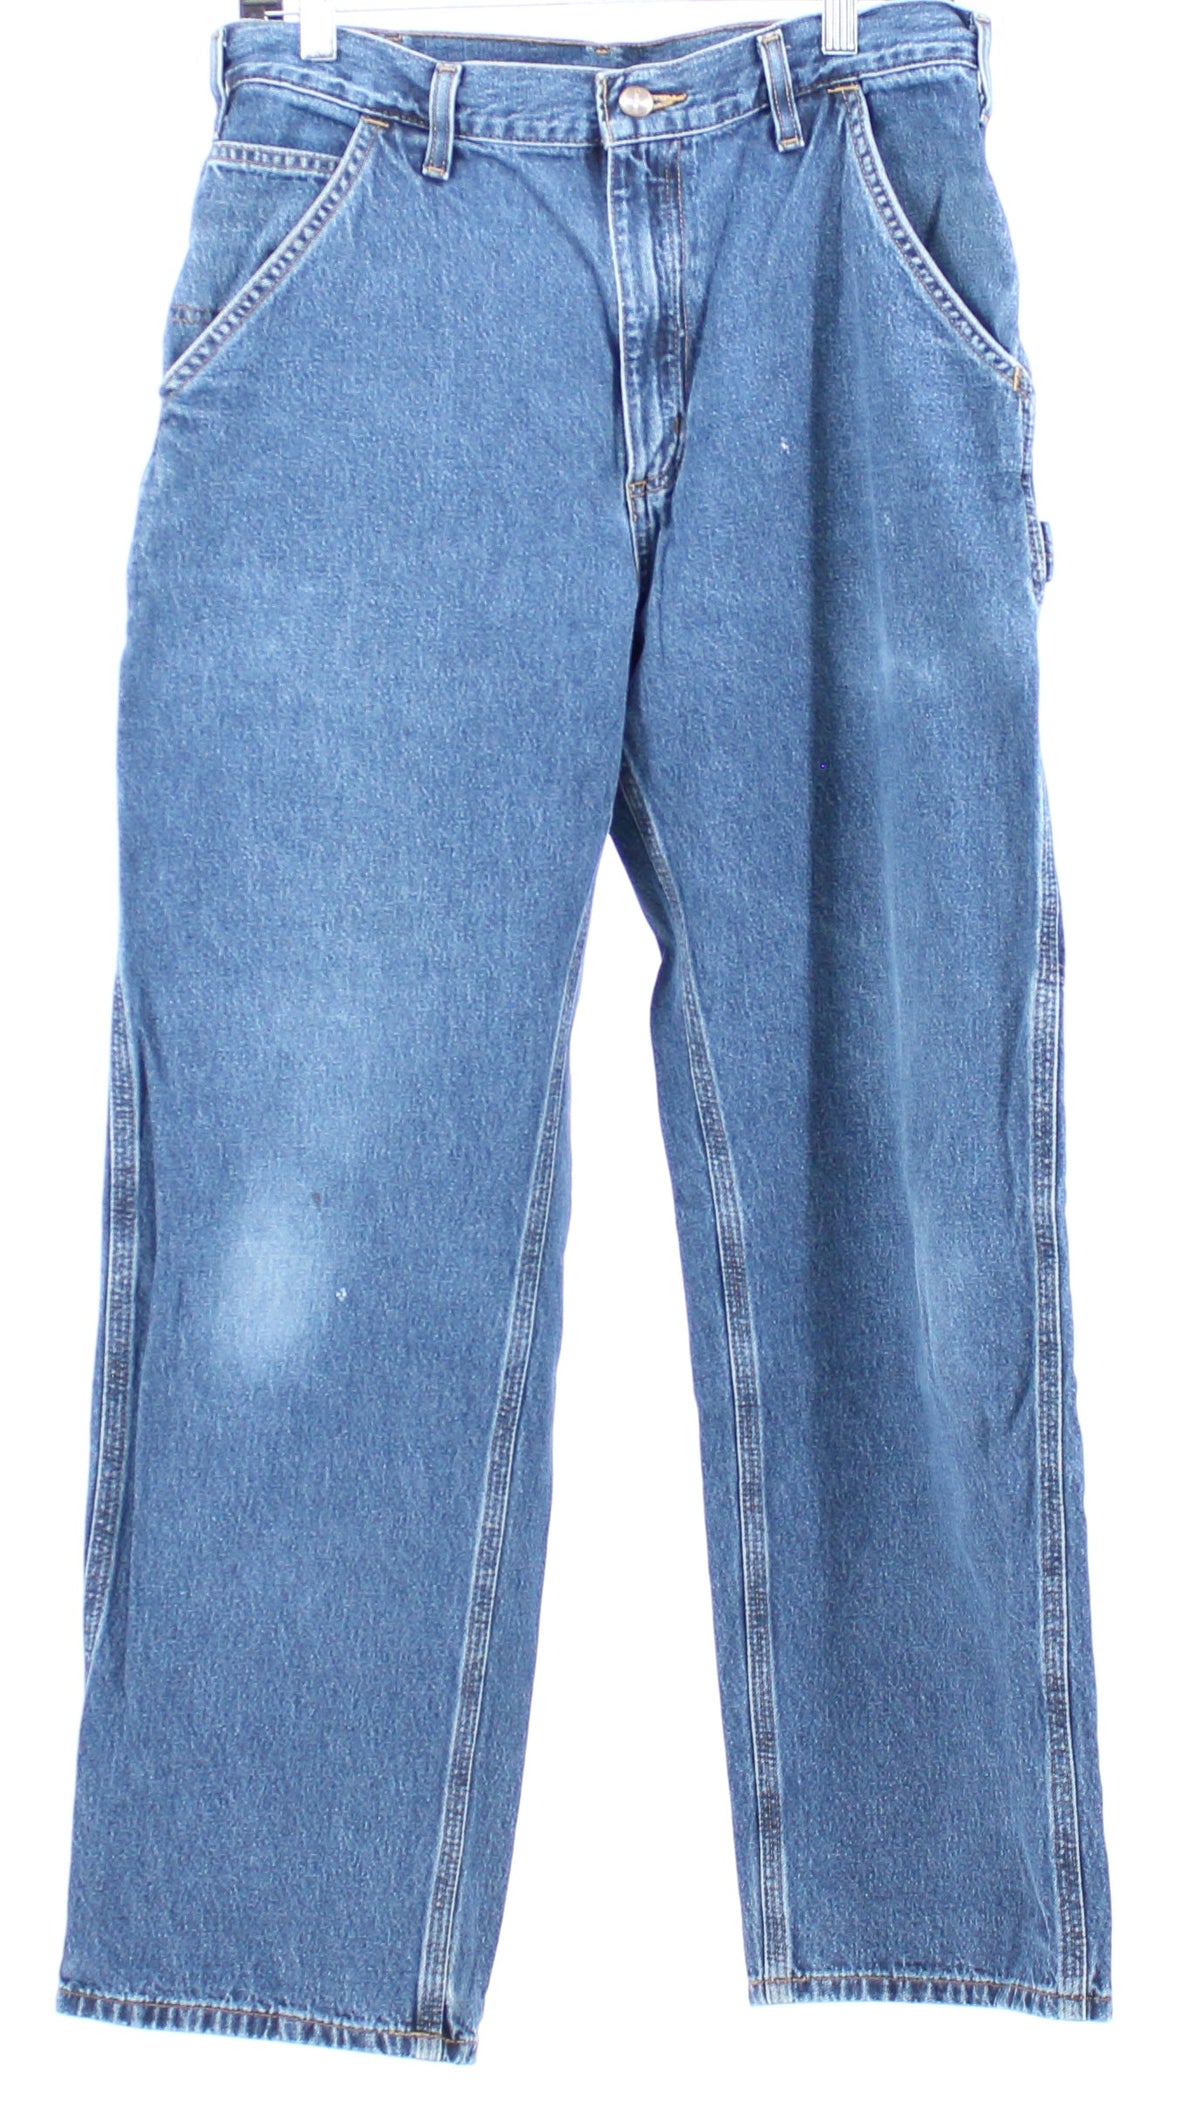 Carhartt Medium to Dark Wash Denim Baggy Jeans